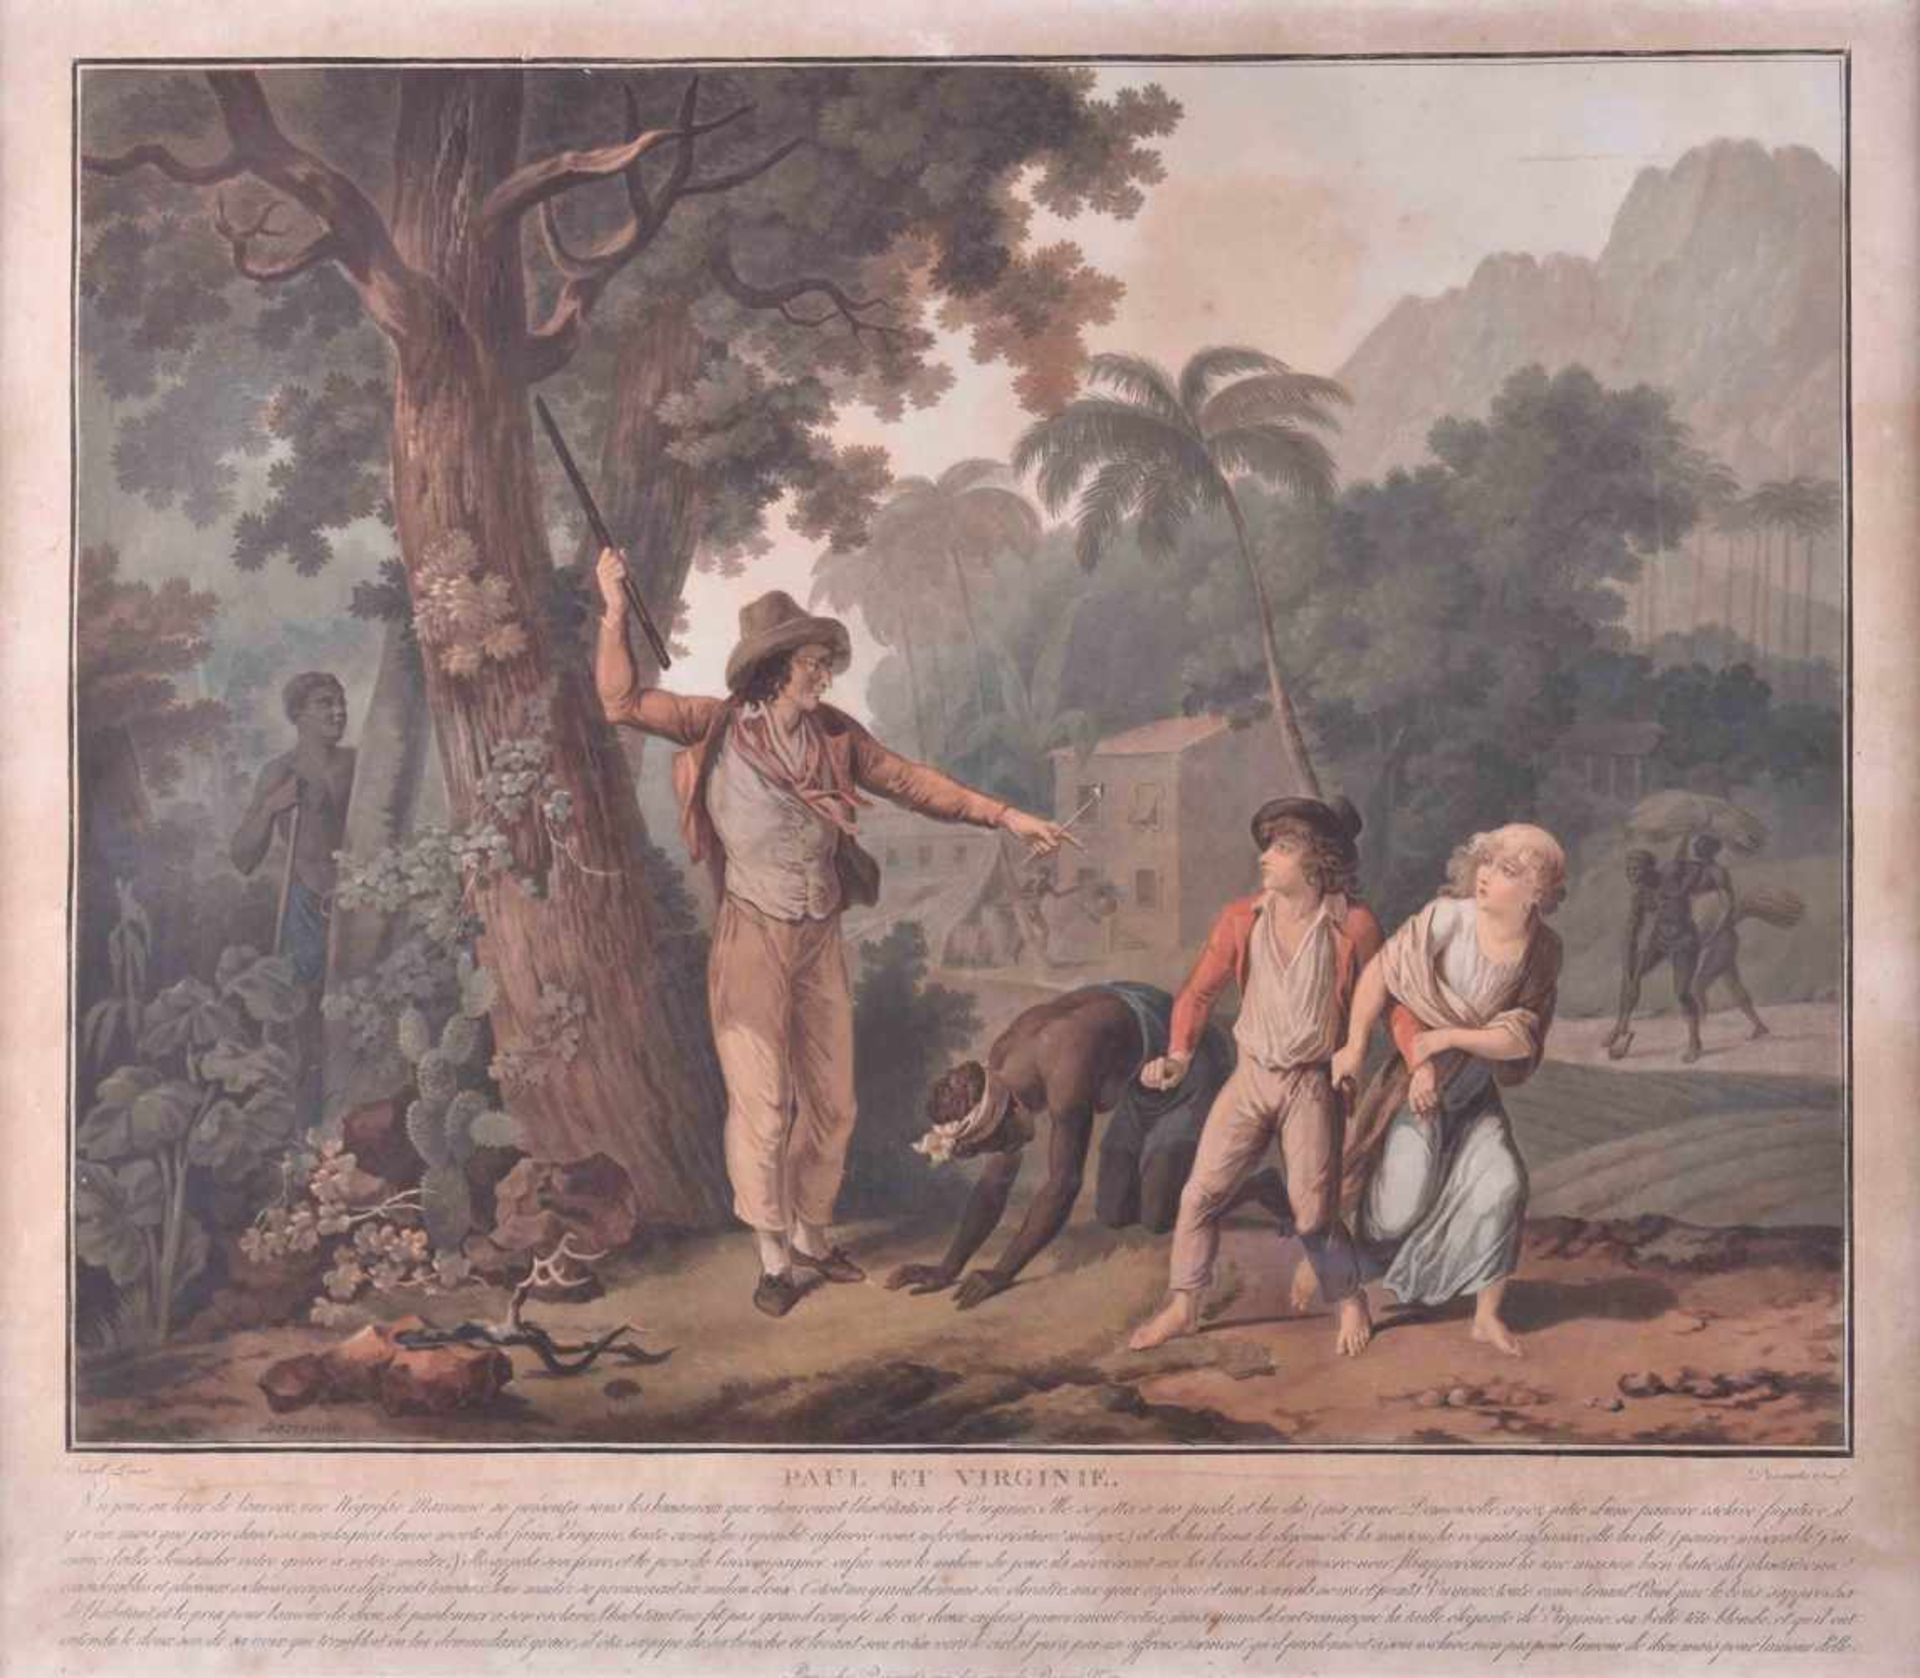 Charles Melchior DESCOURTIS (1753-1820)"Paul et Virginie"Grafik-Farbaquatintaradierung, Sichtmaß: